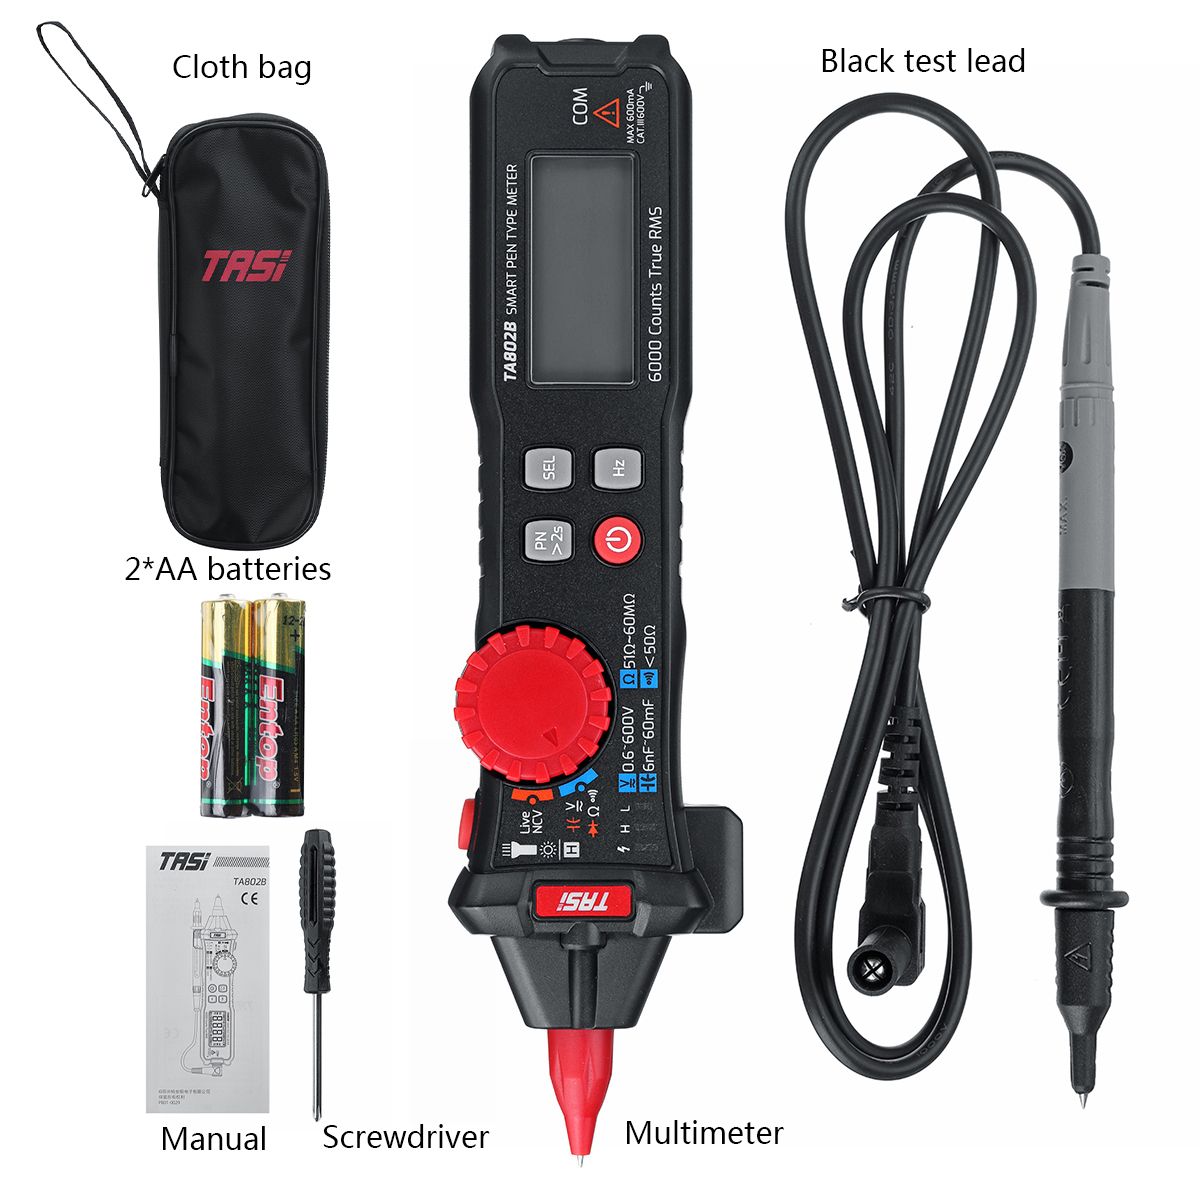 TA802-True-RMS-6000-Counts-Digital-Display-Portable-Pocket-Pen-Multimeter-High-Precision-Smart-Multi-1619173